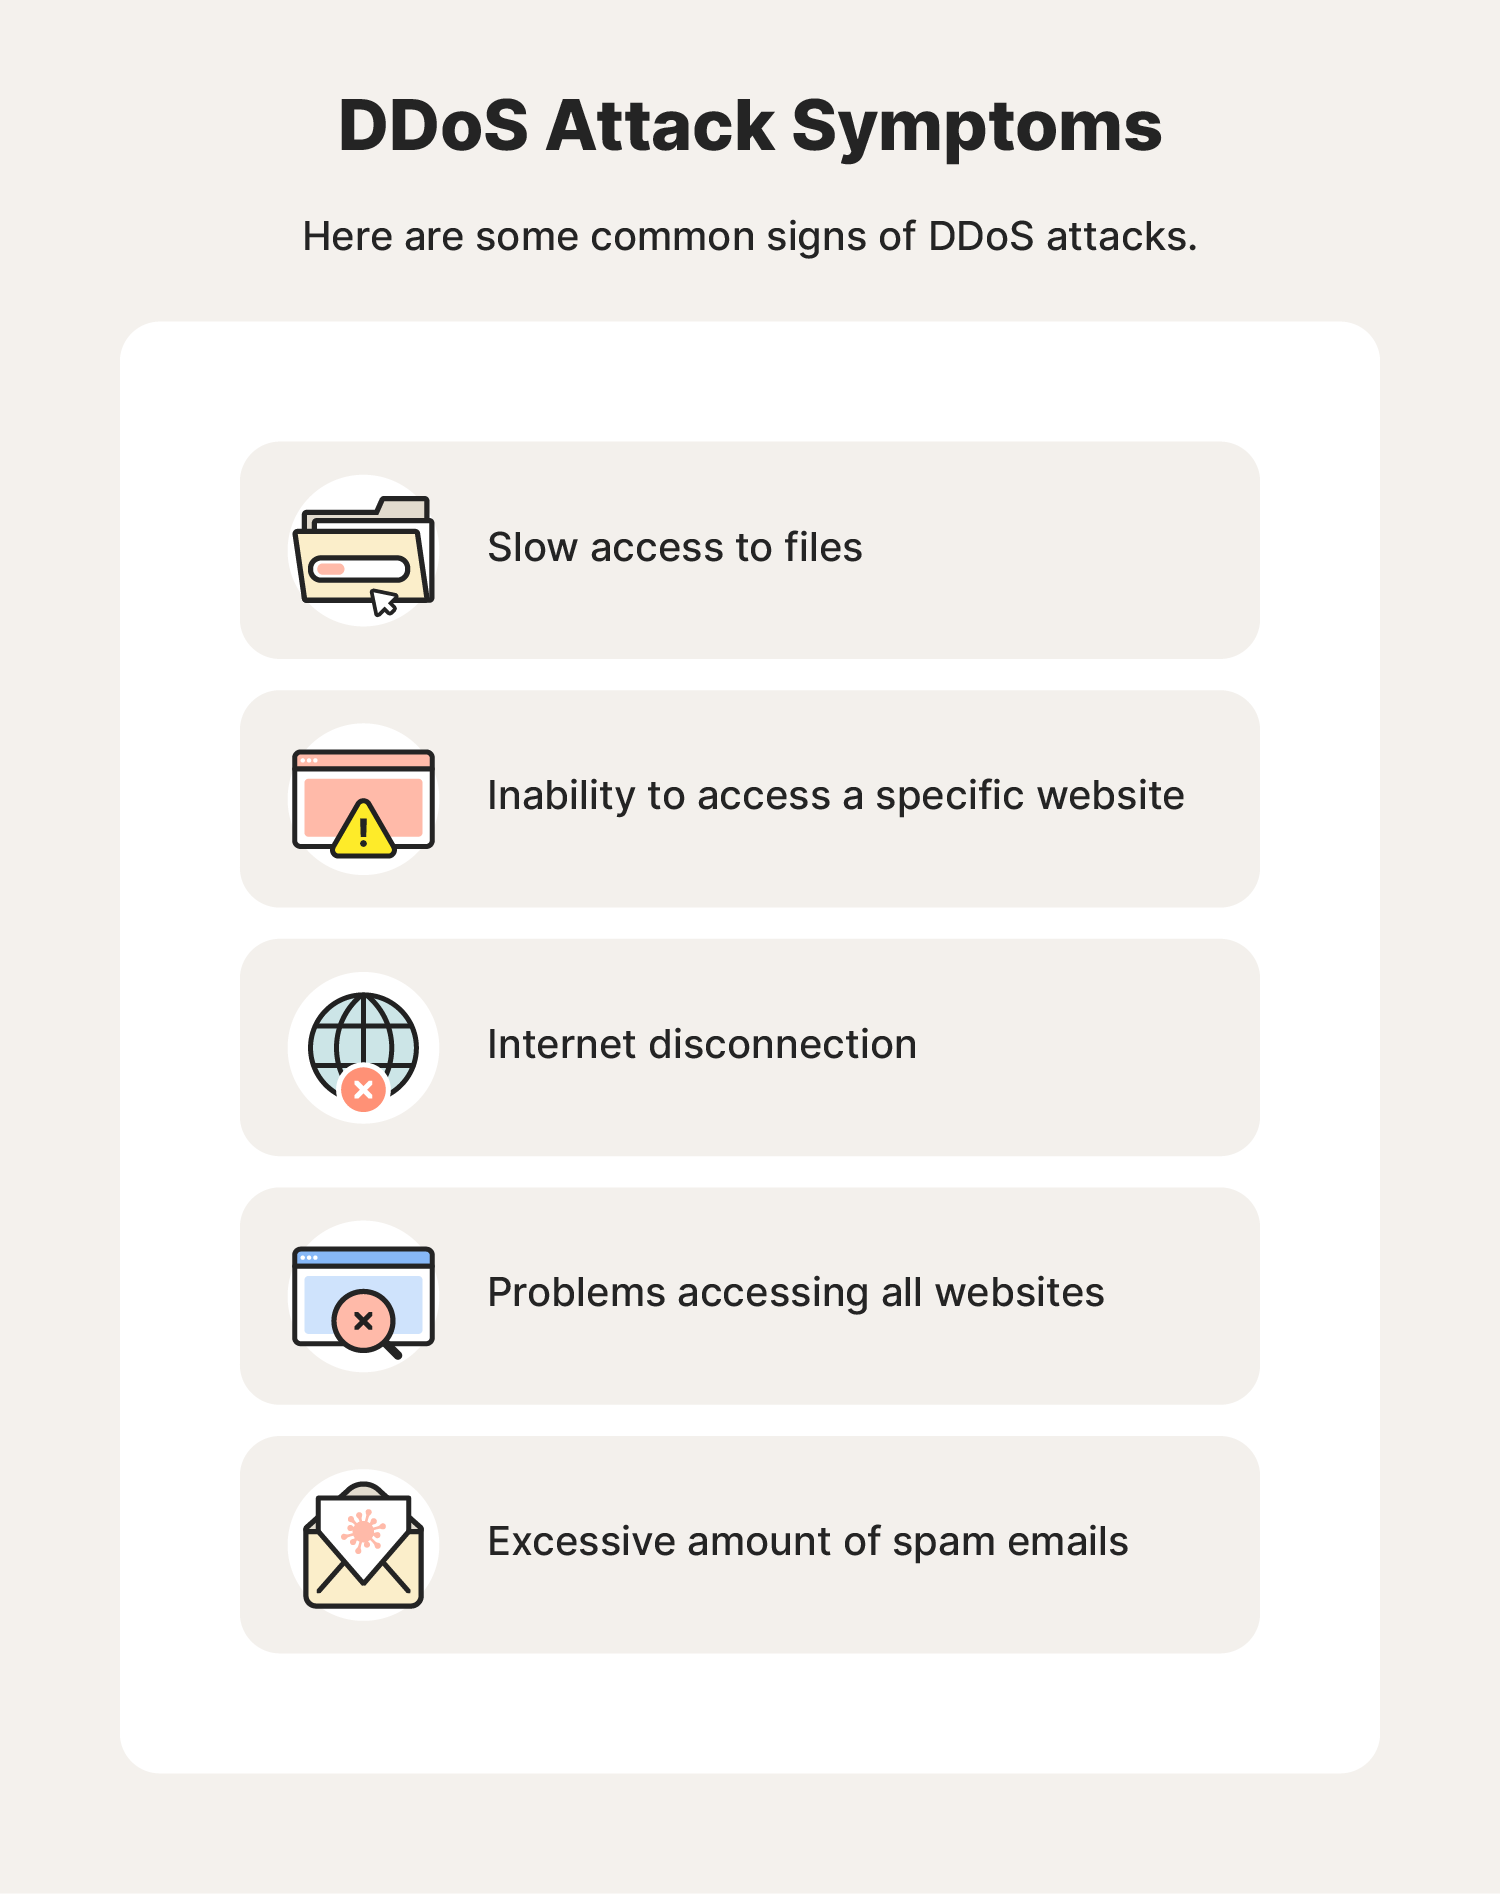 A graphic explains common DDoS attack symptoms.